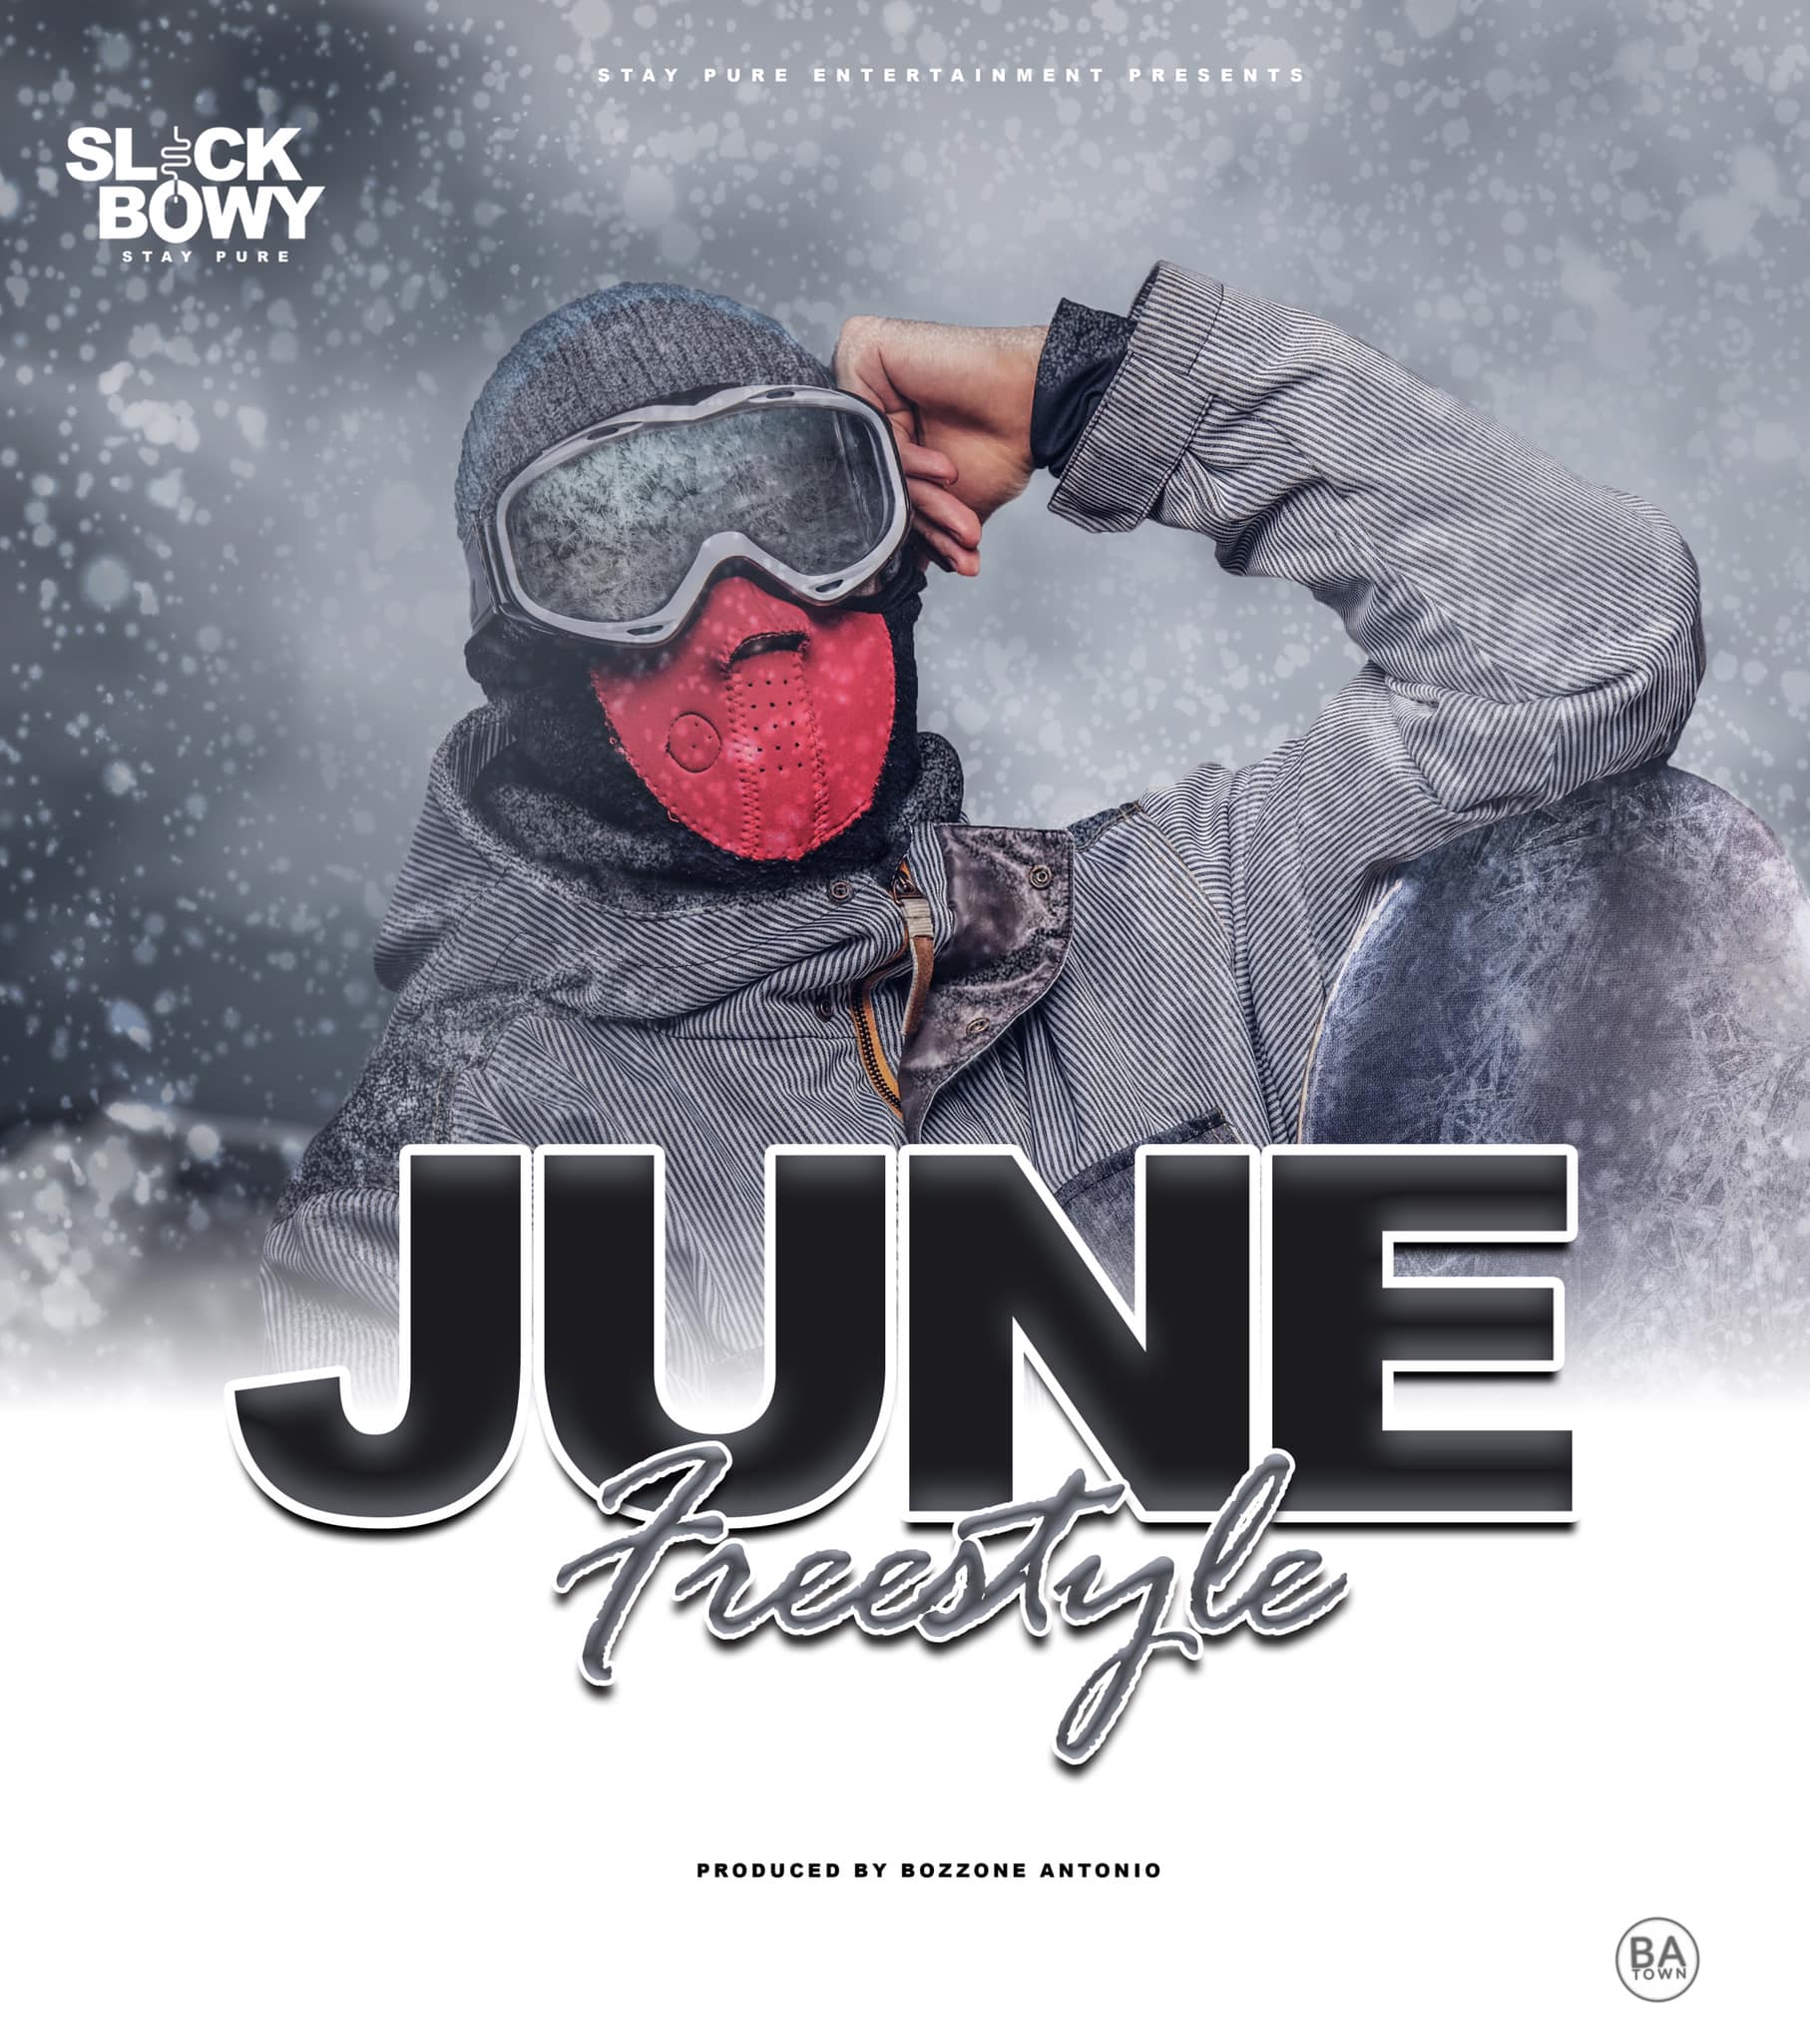 June (Freestyle)